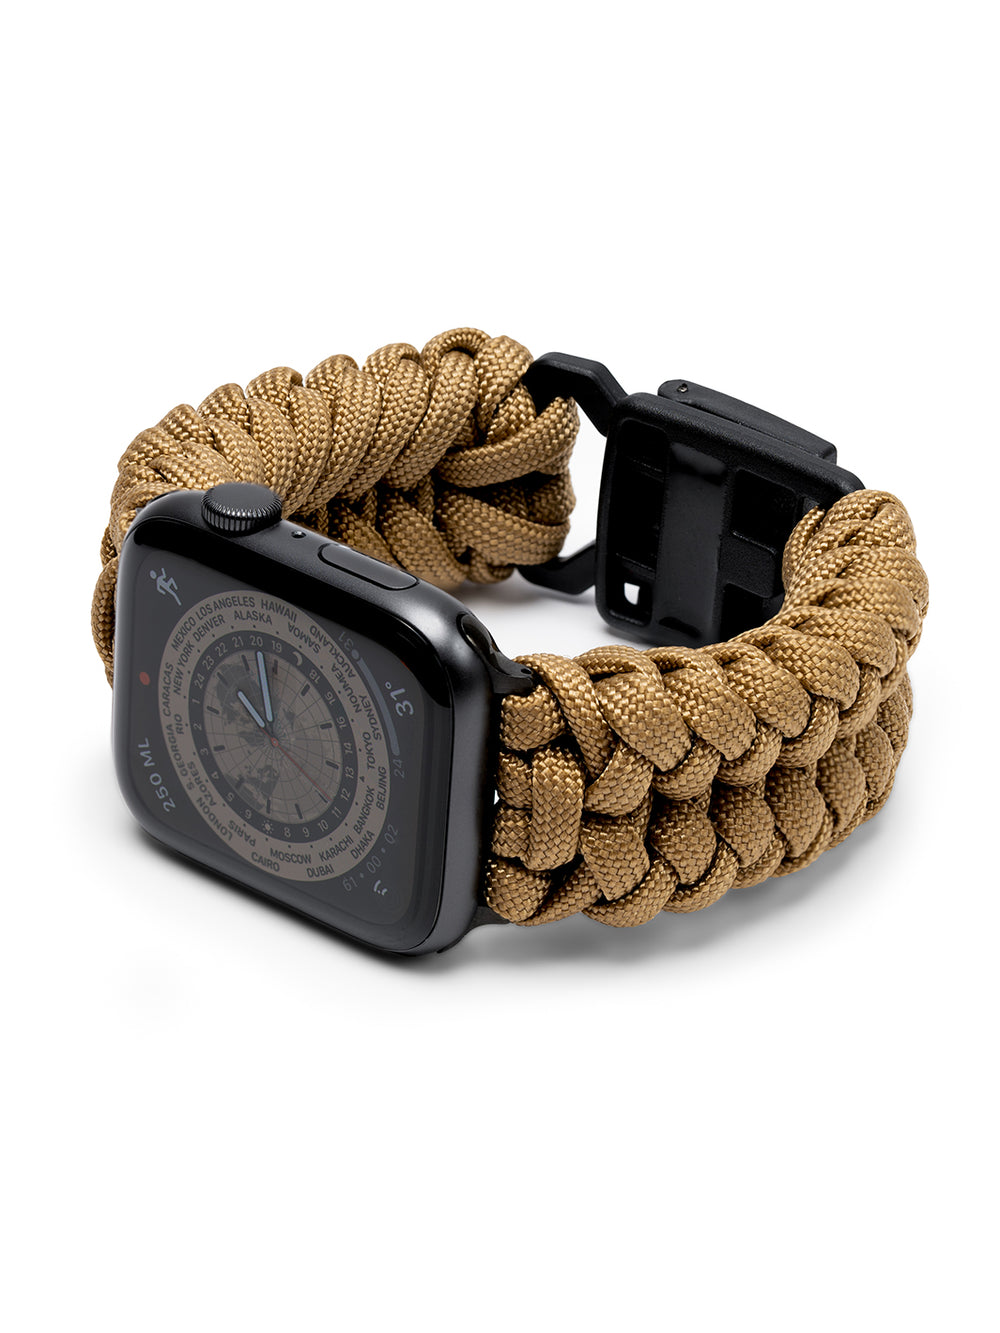 Strapcord Ribs Apple Watch Band Strap Article 002 Desert Tan 3 1065 x 1420